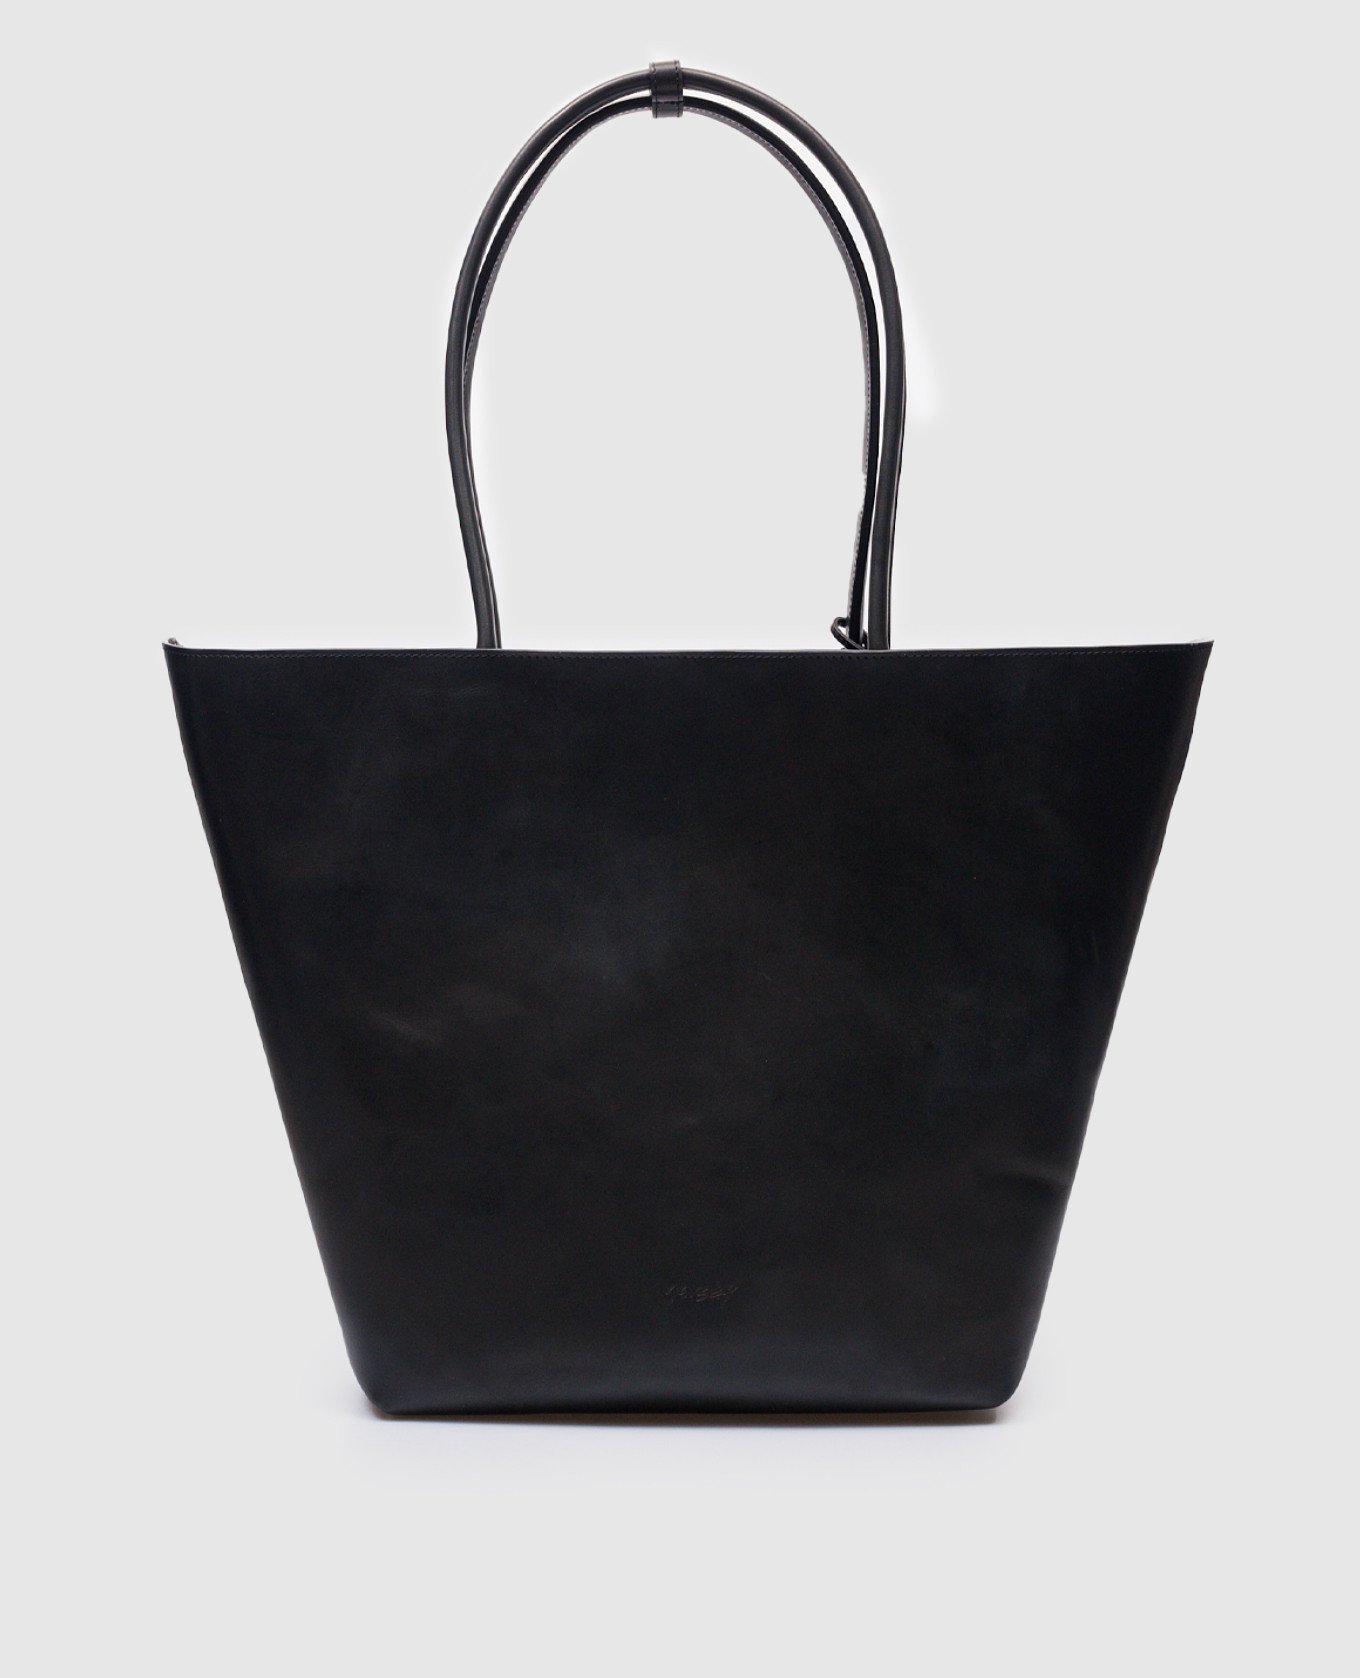 Svaso black leather bag